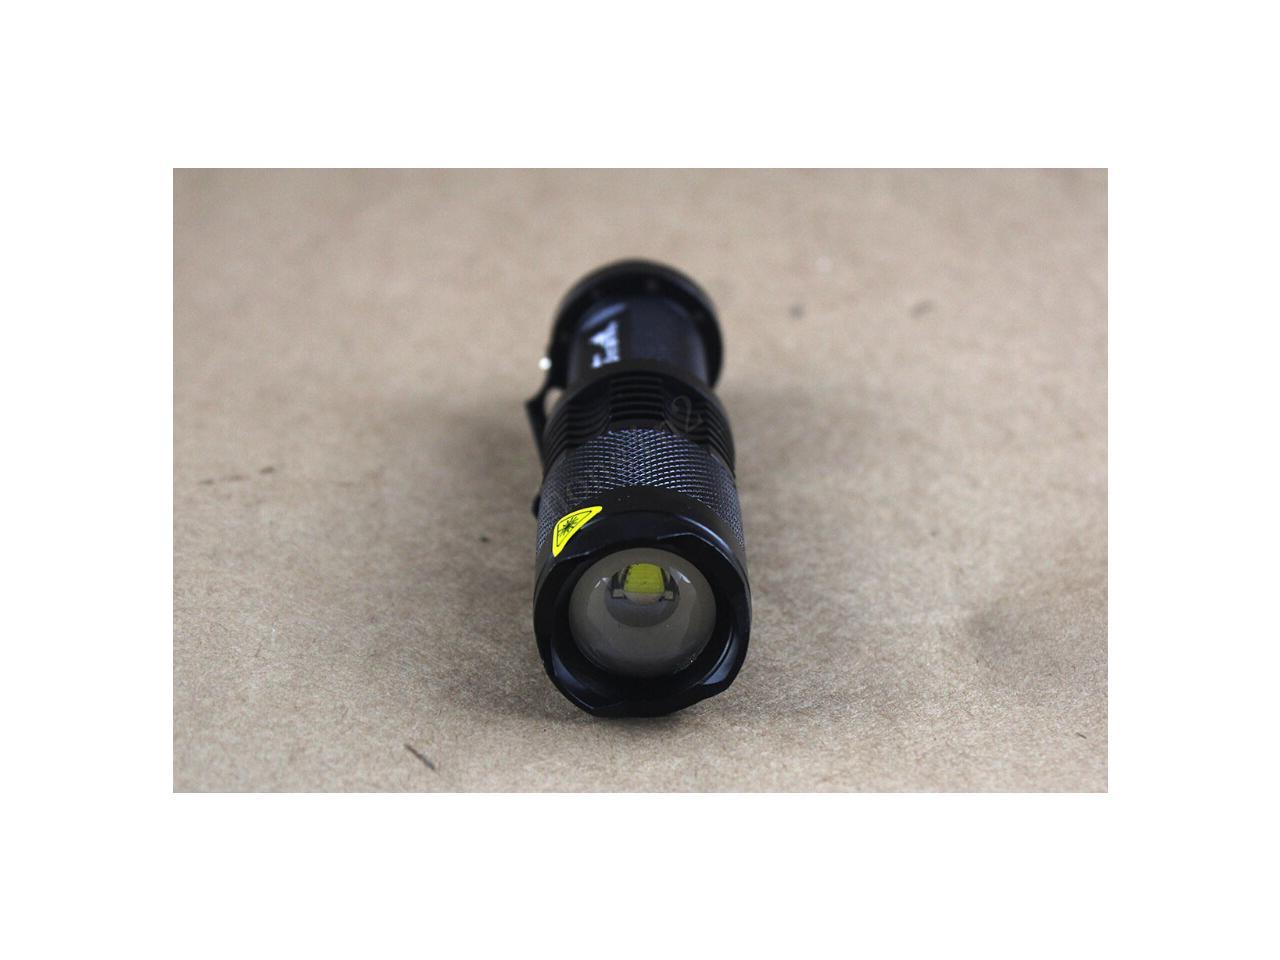 UltraFire UltraFire Tactical Flashlight SK98 800 Lumens Adjustable Focus 3 Mode Small Port 